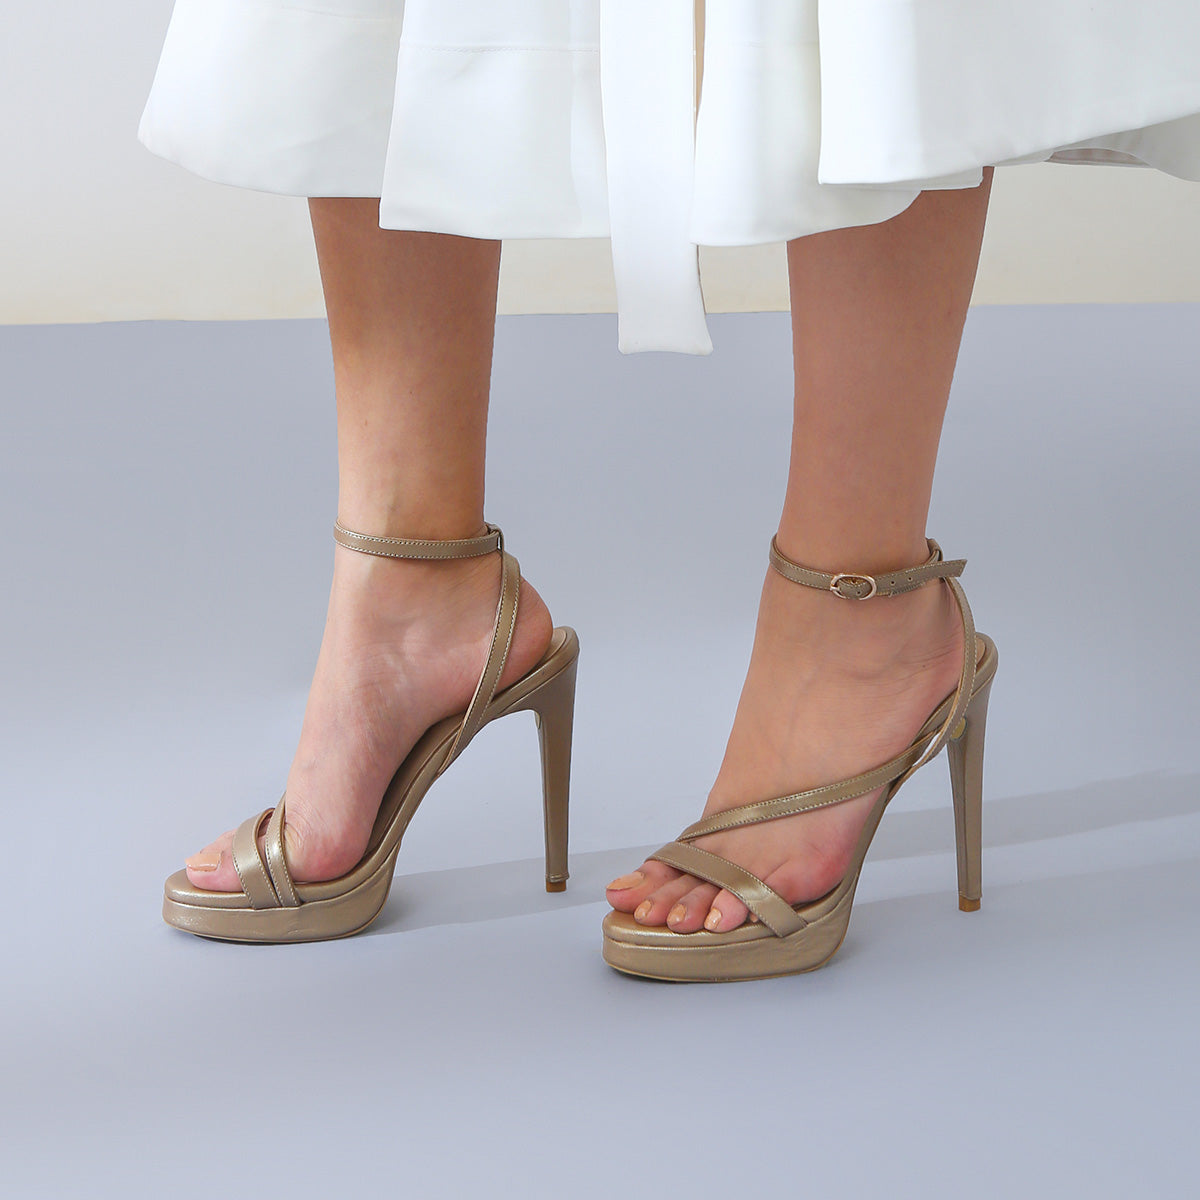 Black Ankle Strap High Heels Open Toe Stiletto Prom Heel Sandals for Women  - Milanoo.com